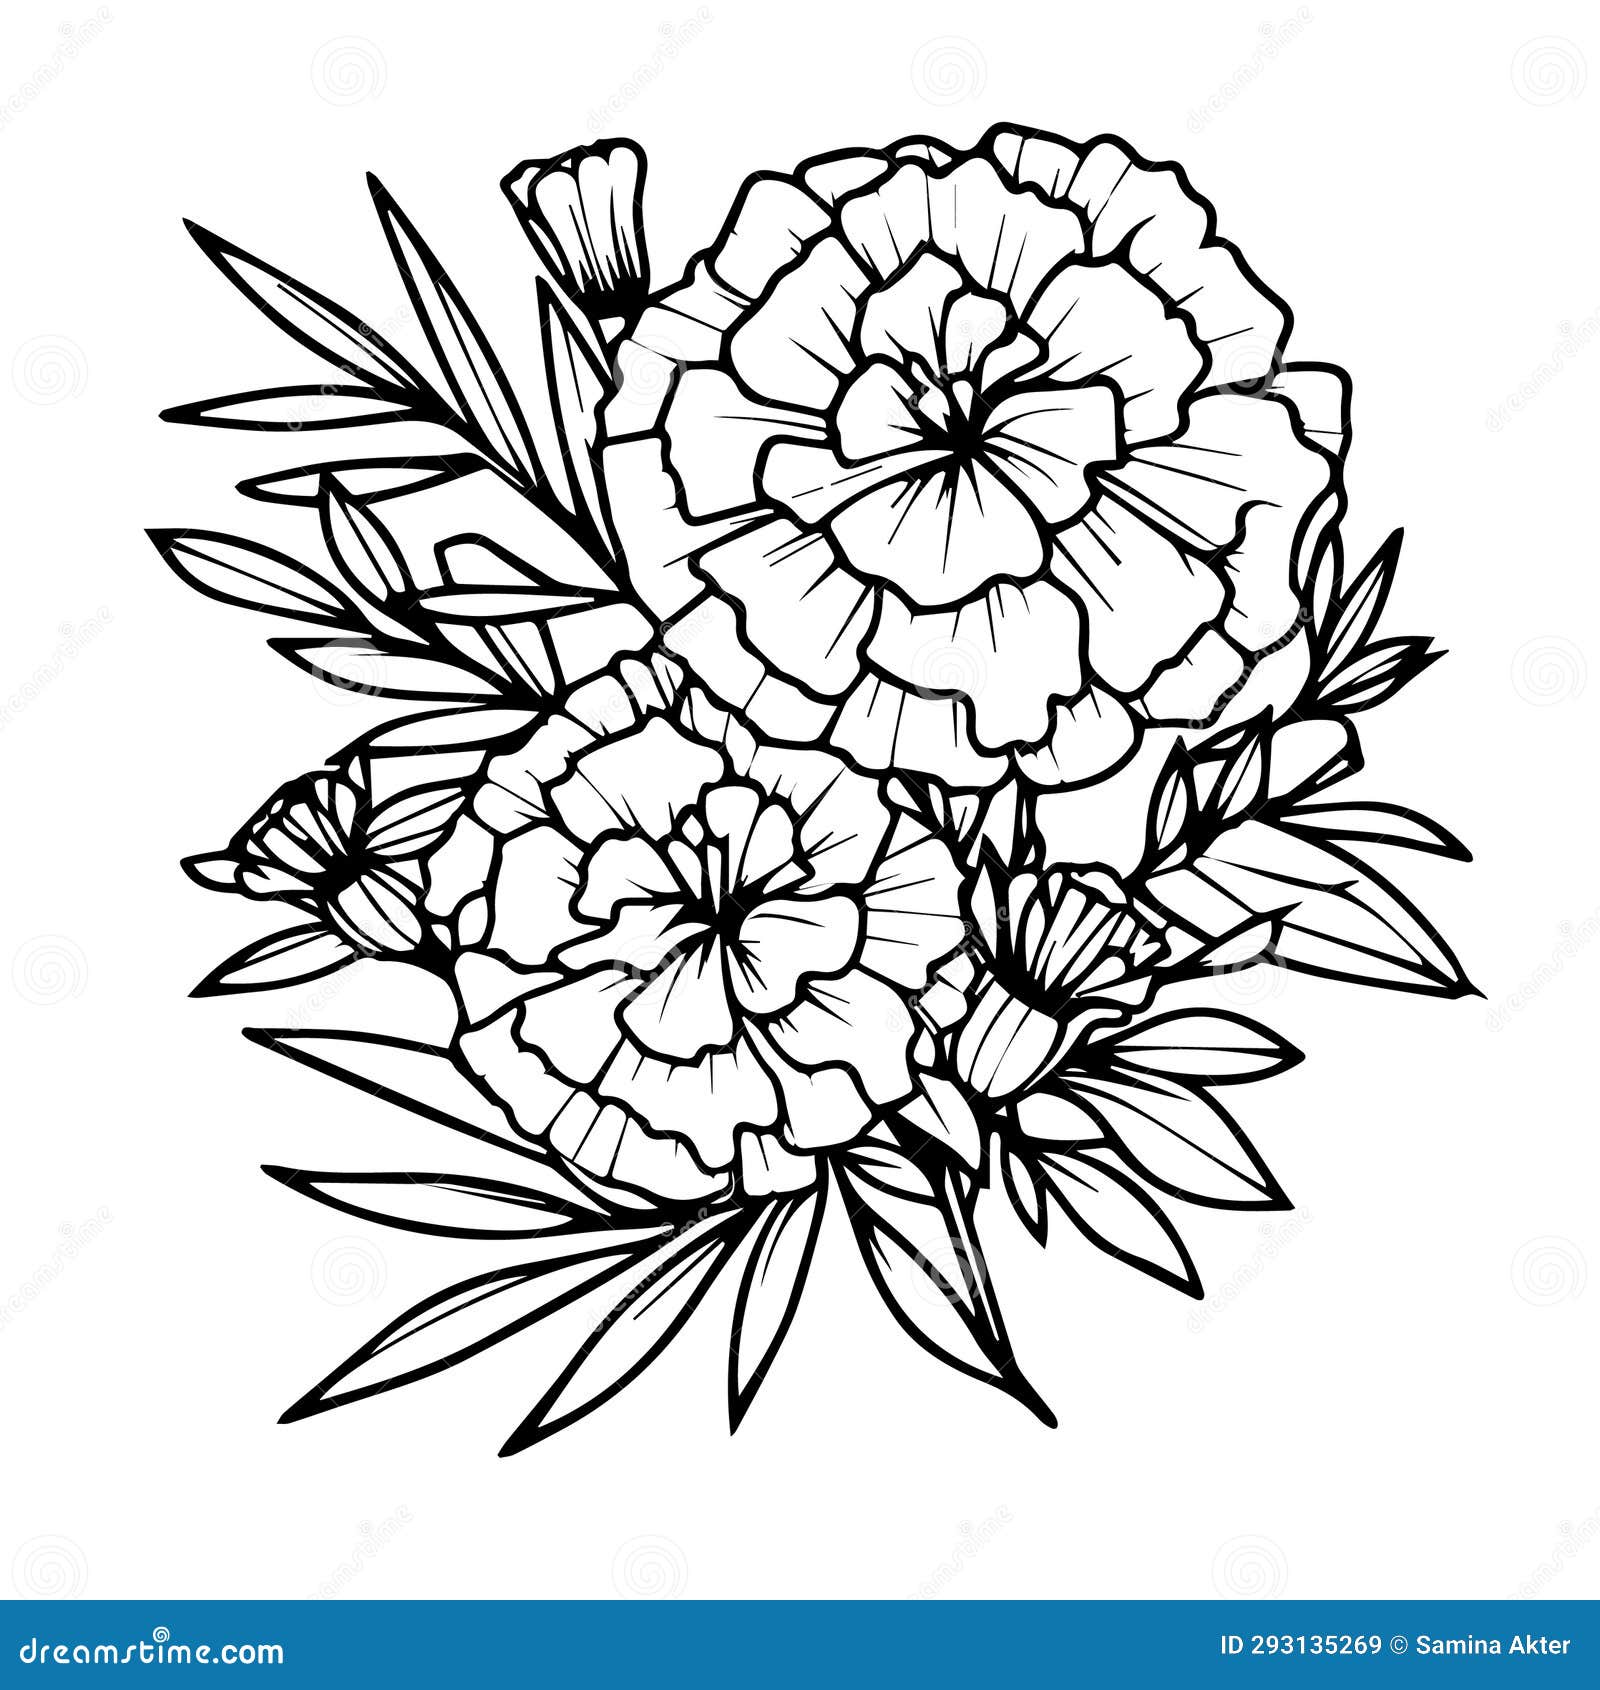 October Birth Flower Tattoo Ideas {Marigolds + Cosmos} - TattooGlee | Birth flower  tattoos, October birth flowers, Birth flowers